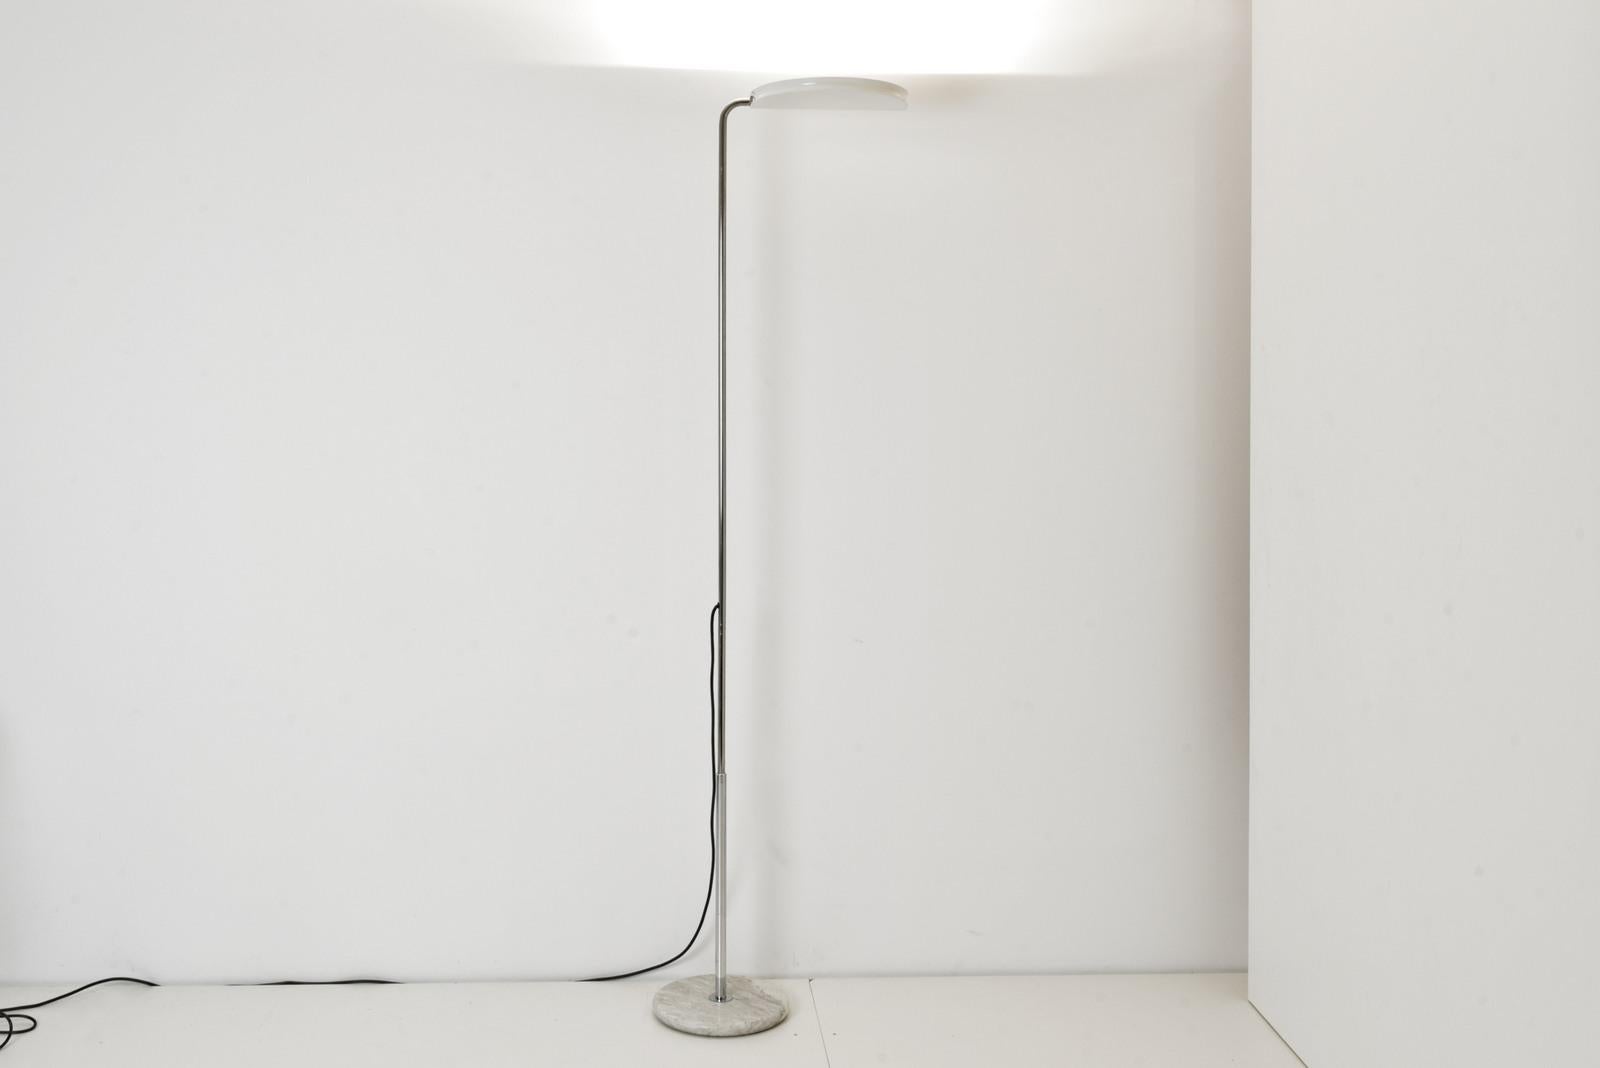 Late 20th Century Floor Lamp Mezzaluna by Bruno Gecchelin for Skipper, Italy - 1974 For Sale